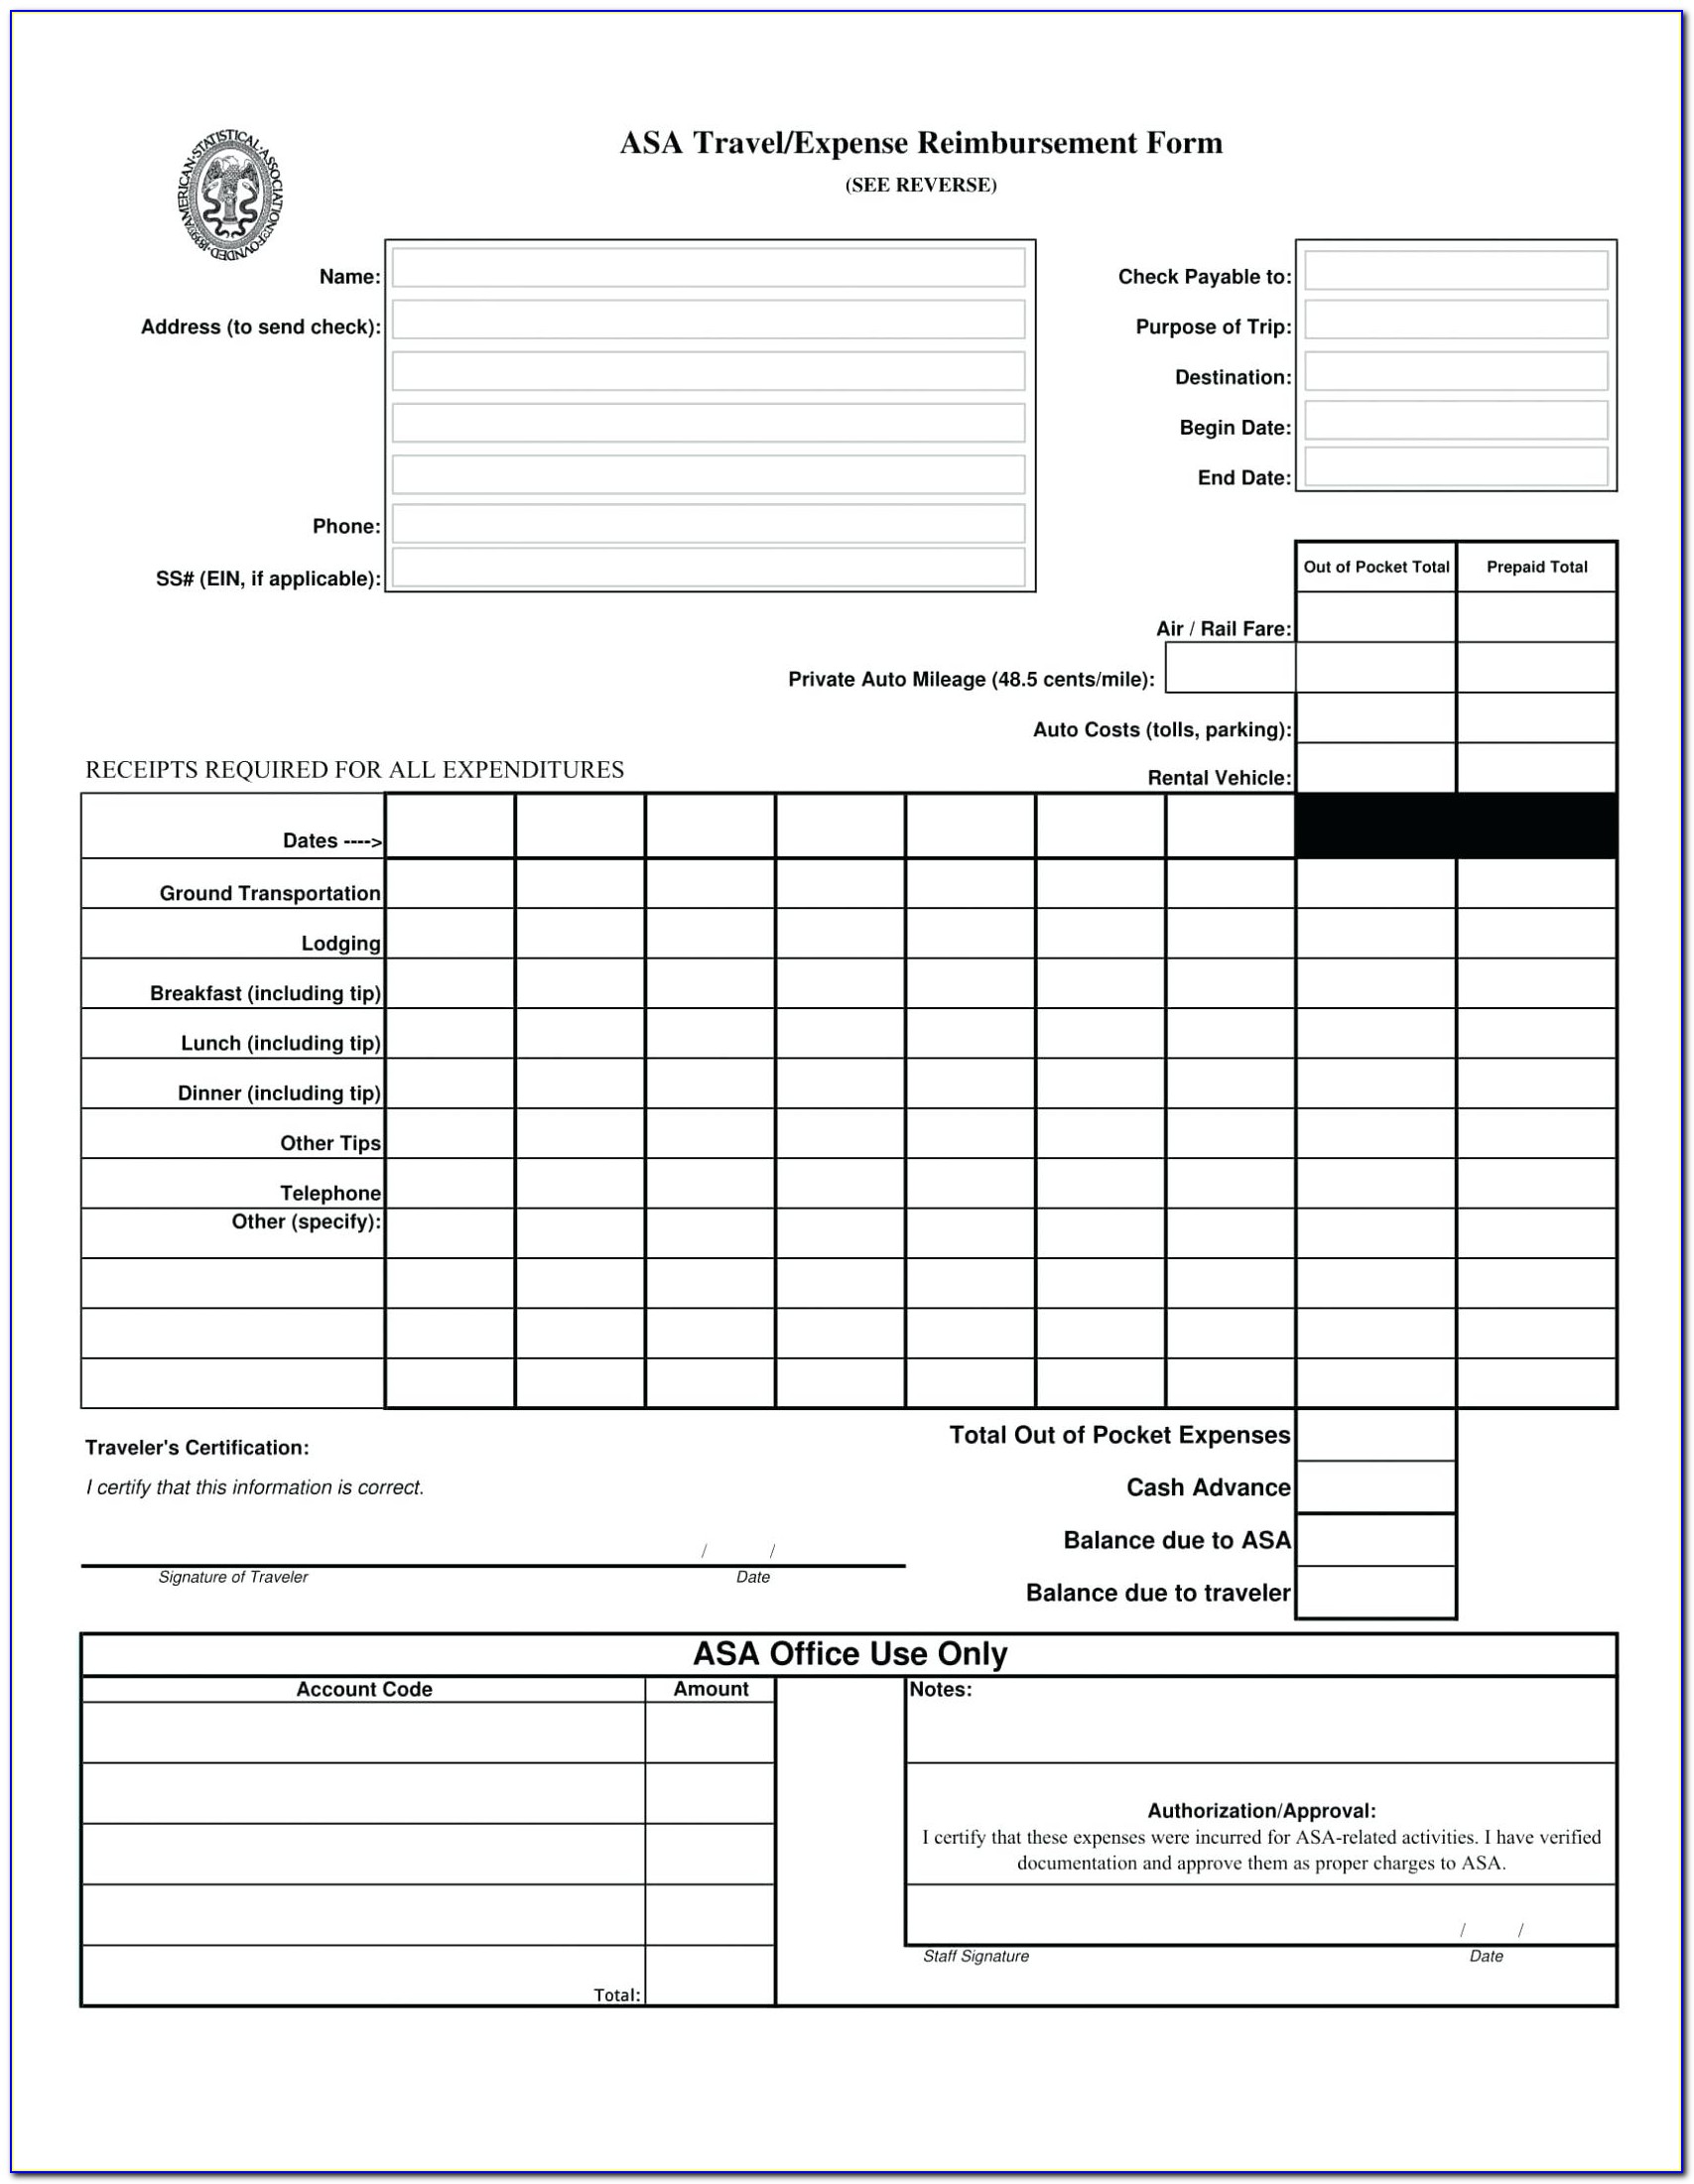 r-d-tax-credit-formula-form-resume-examples-azdyrjz579